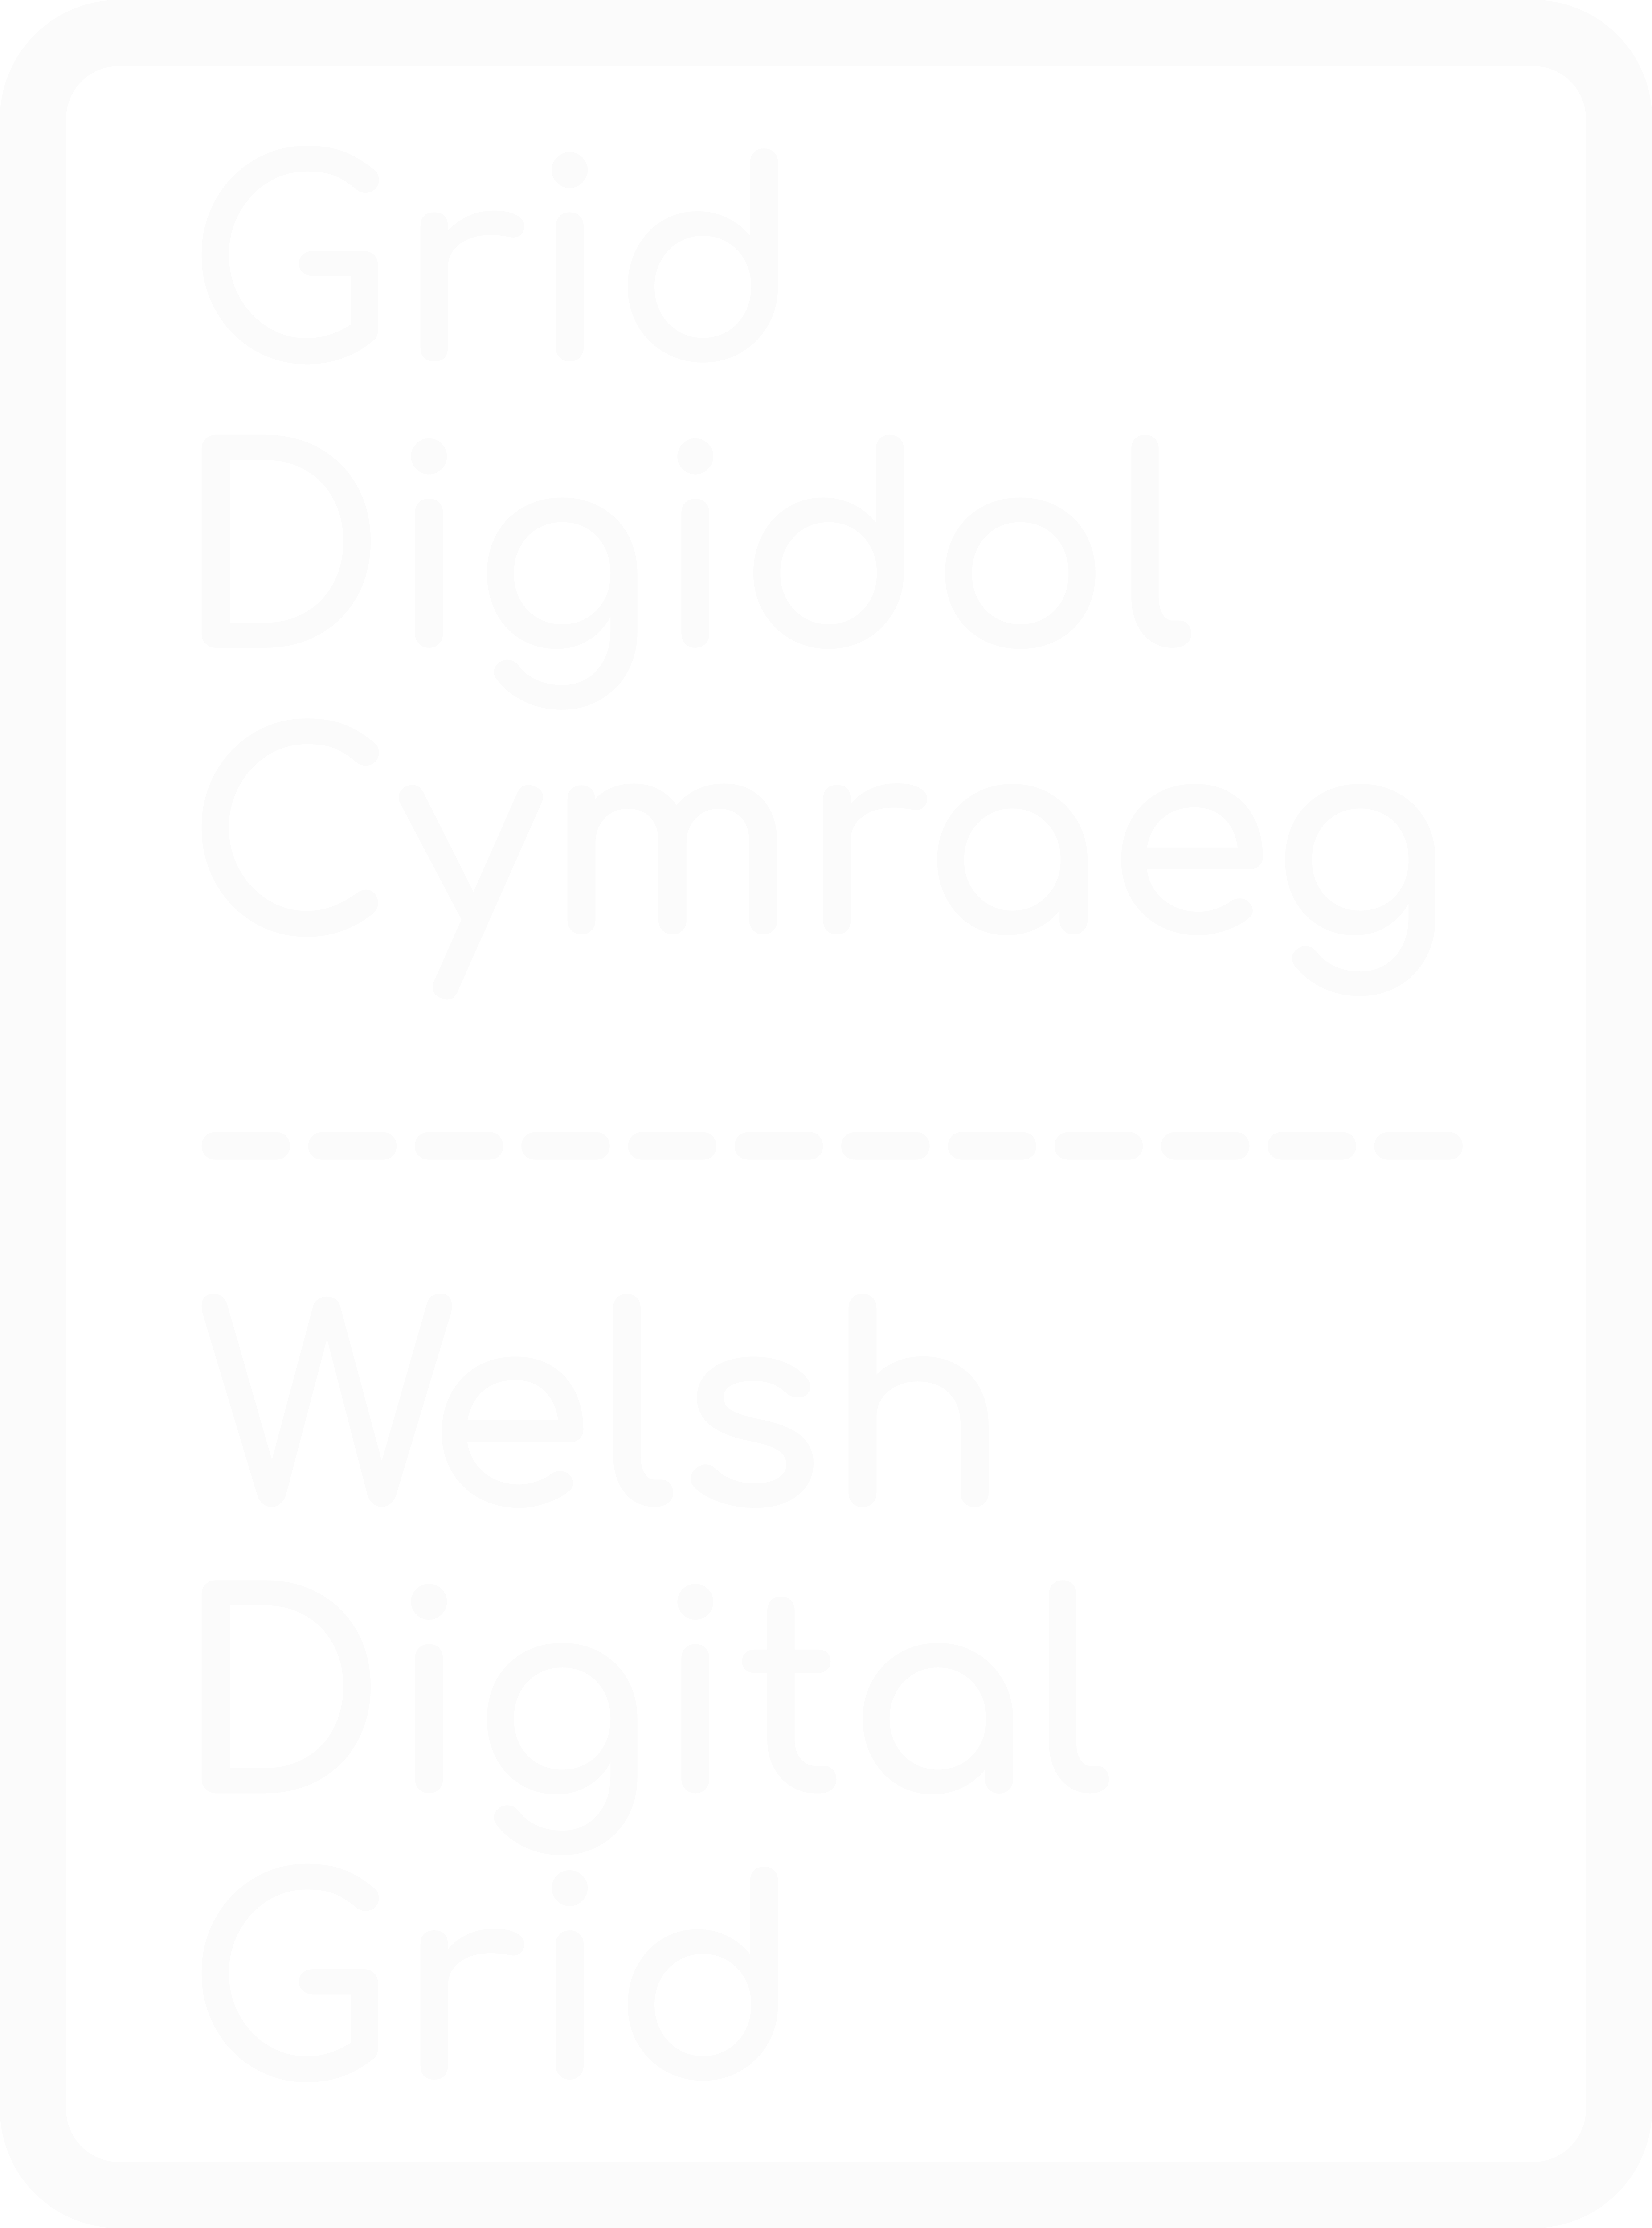 Welsh Digital Grid